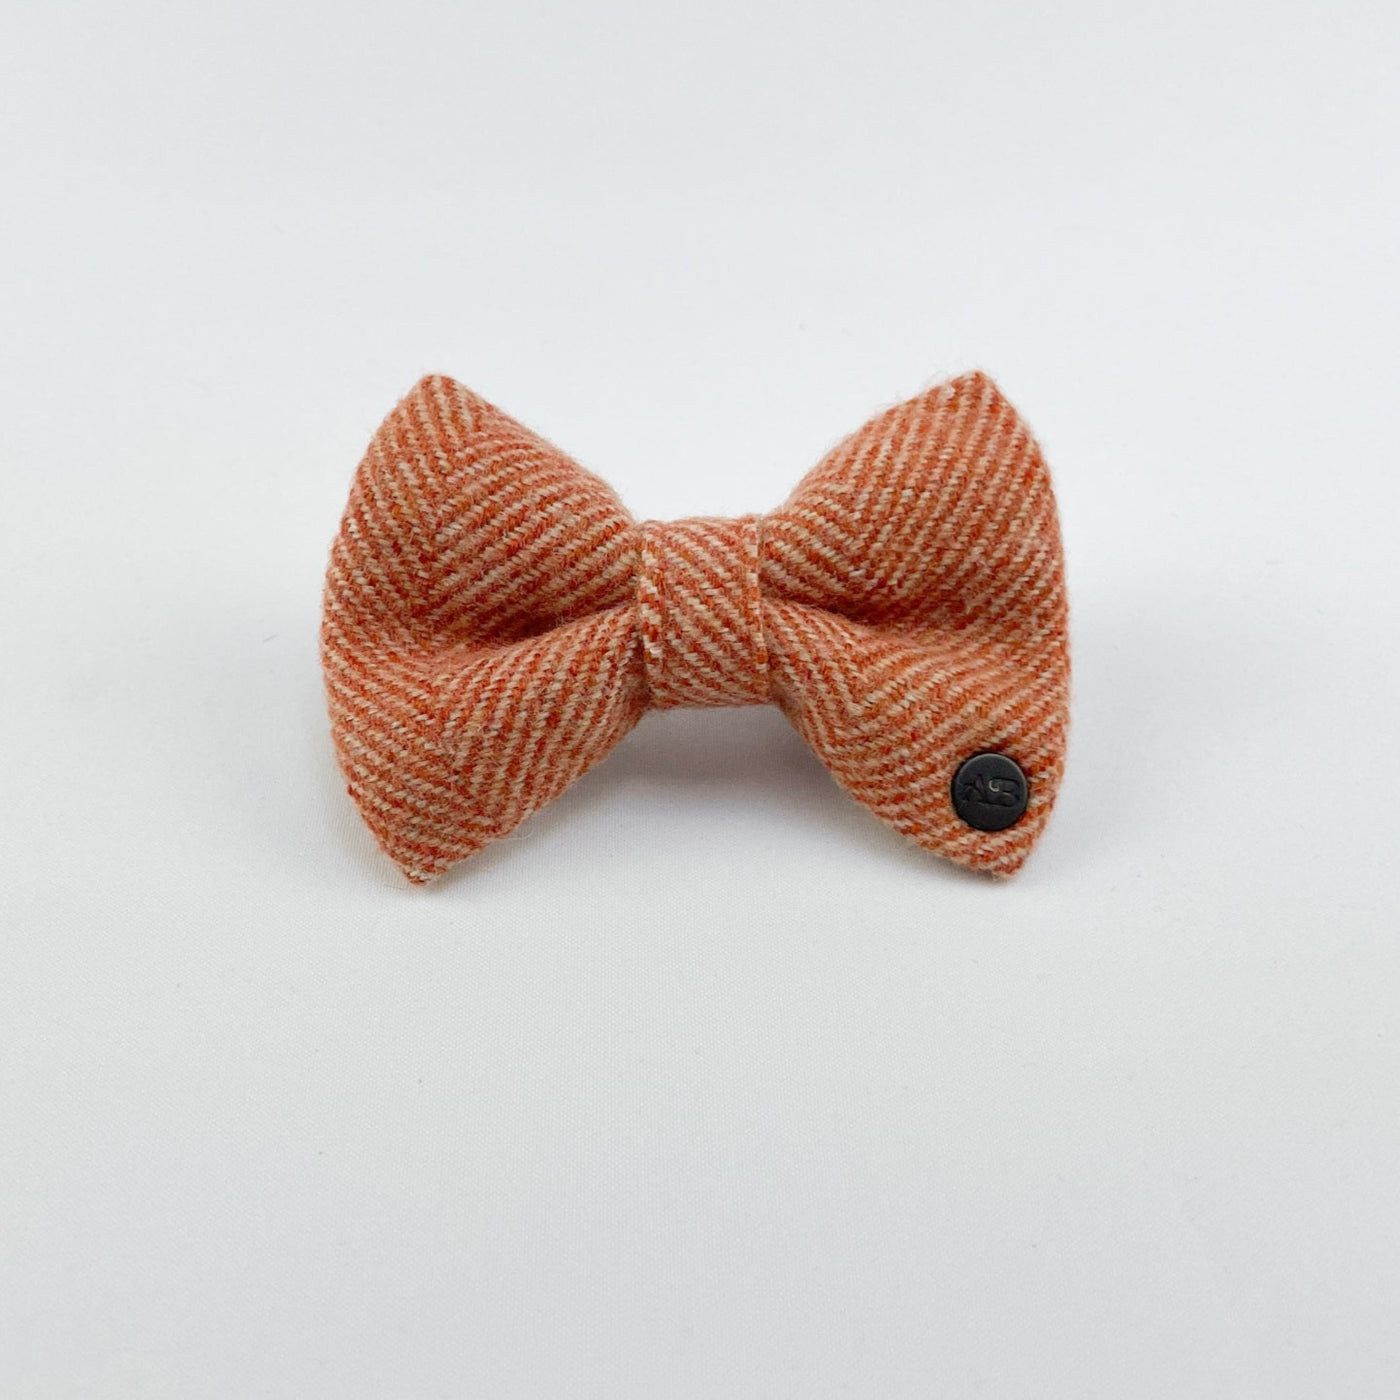 Luxury Burnt Umber Herringbone Tweed Dog Bow Tie from the front.